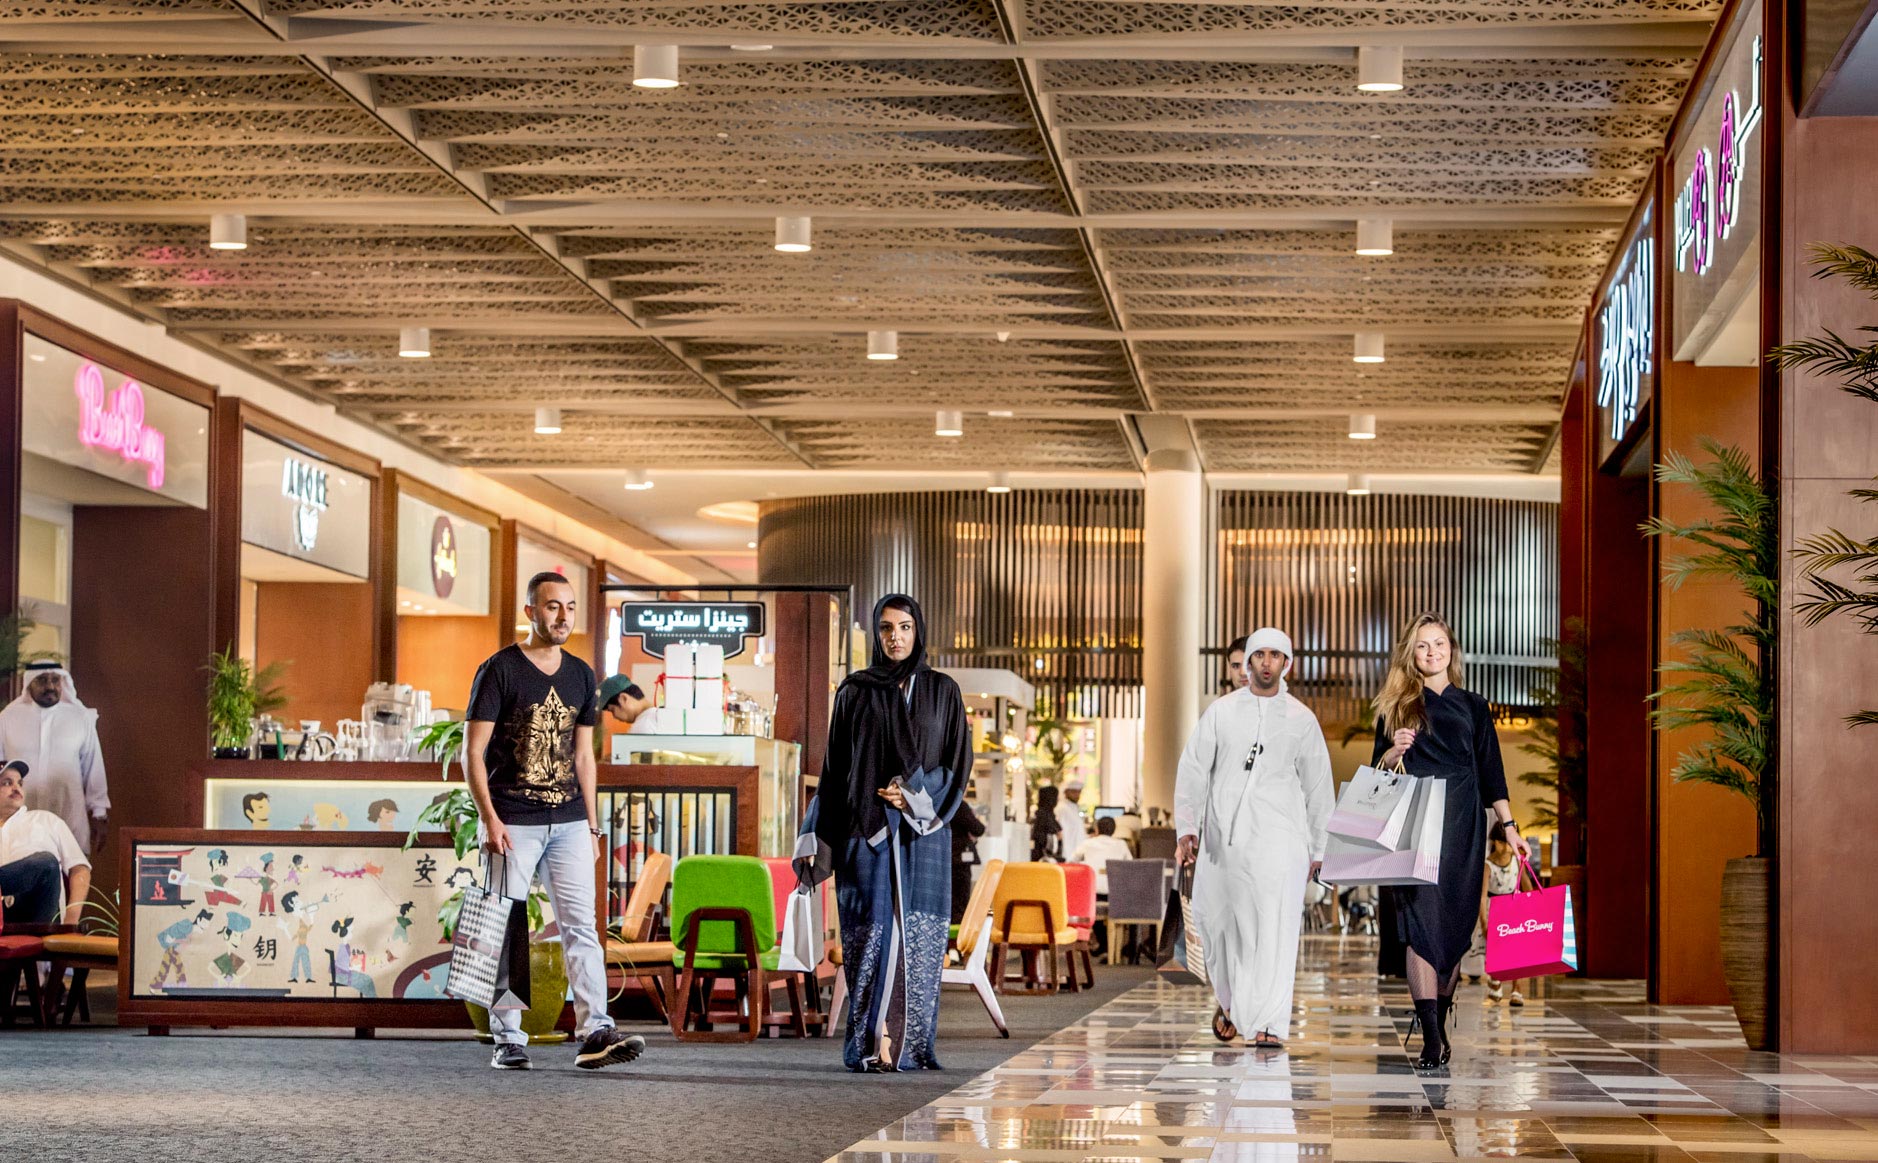 Retail market in Dubai